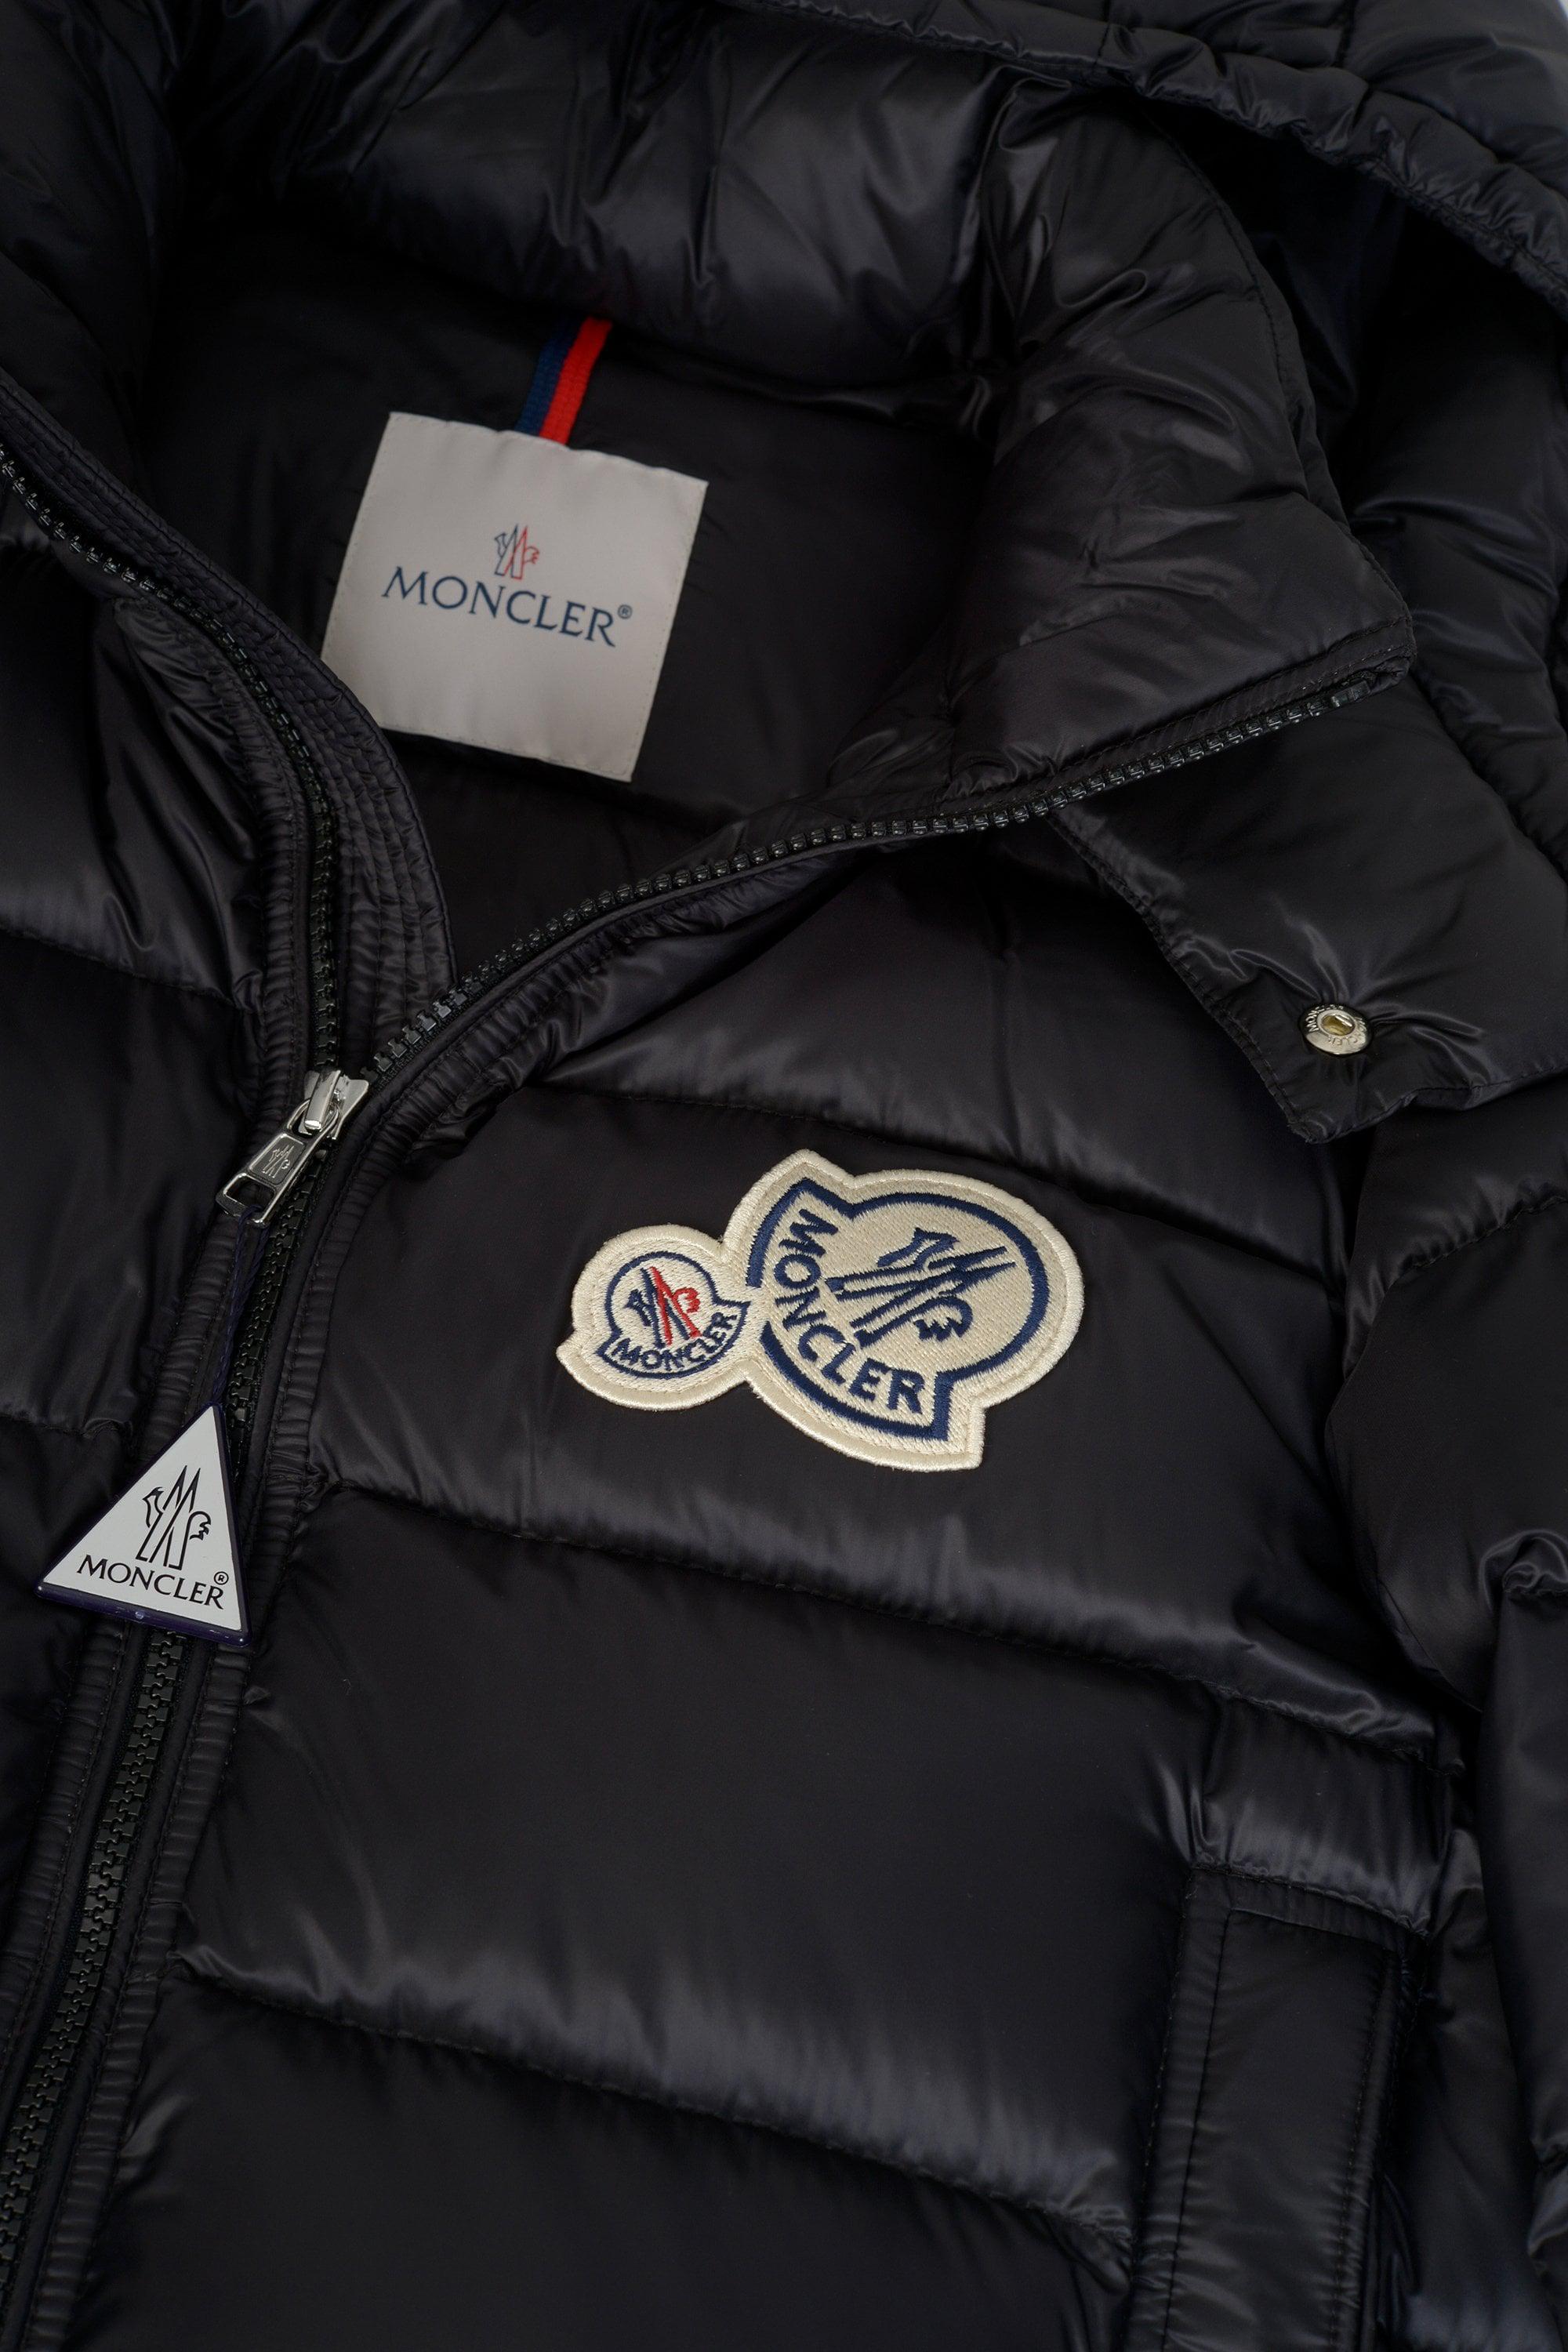 Moncler Synthetic Bramant Jacket in Black for Men - Lyst